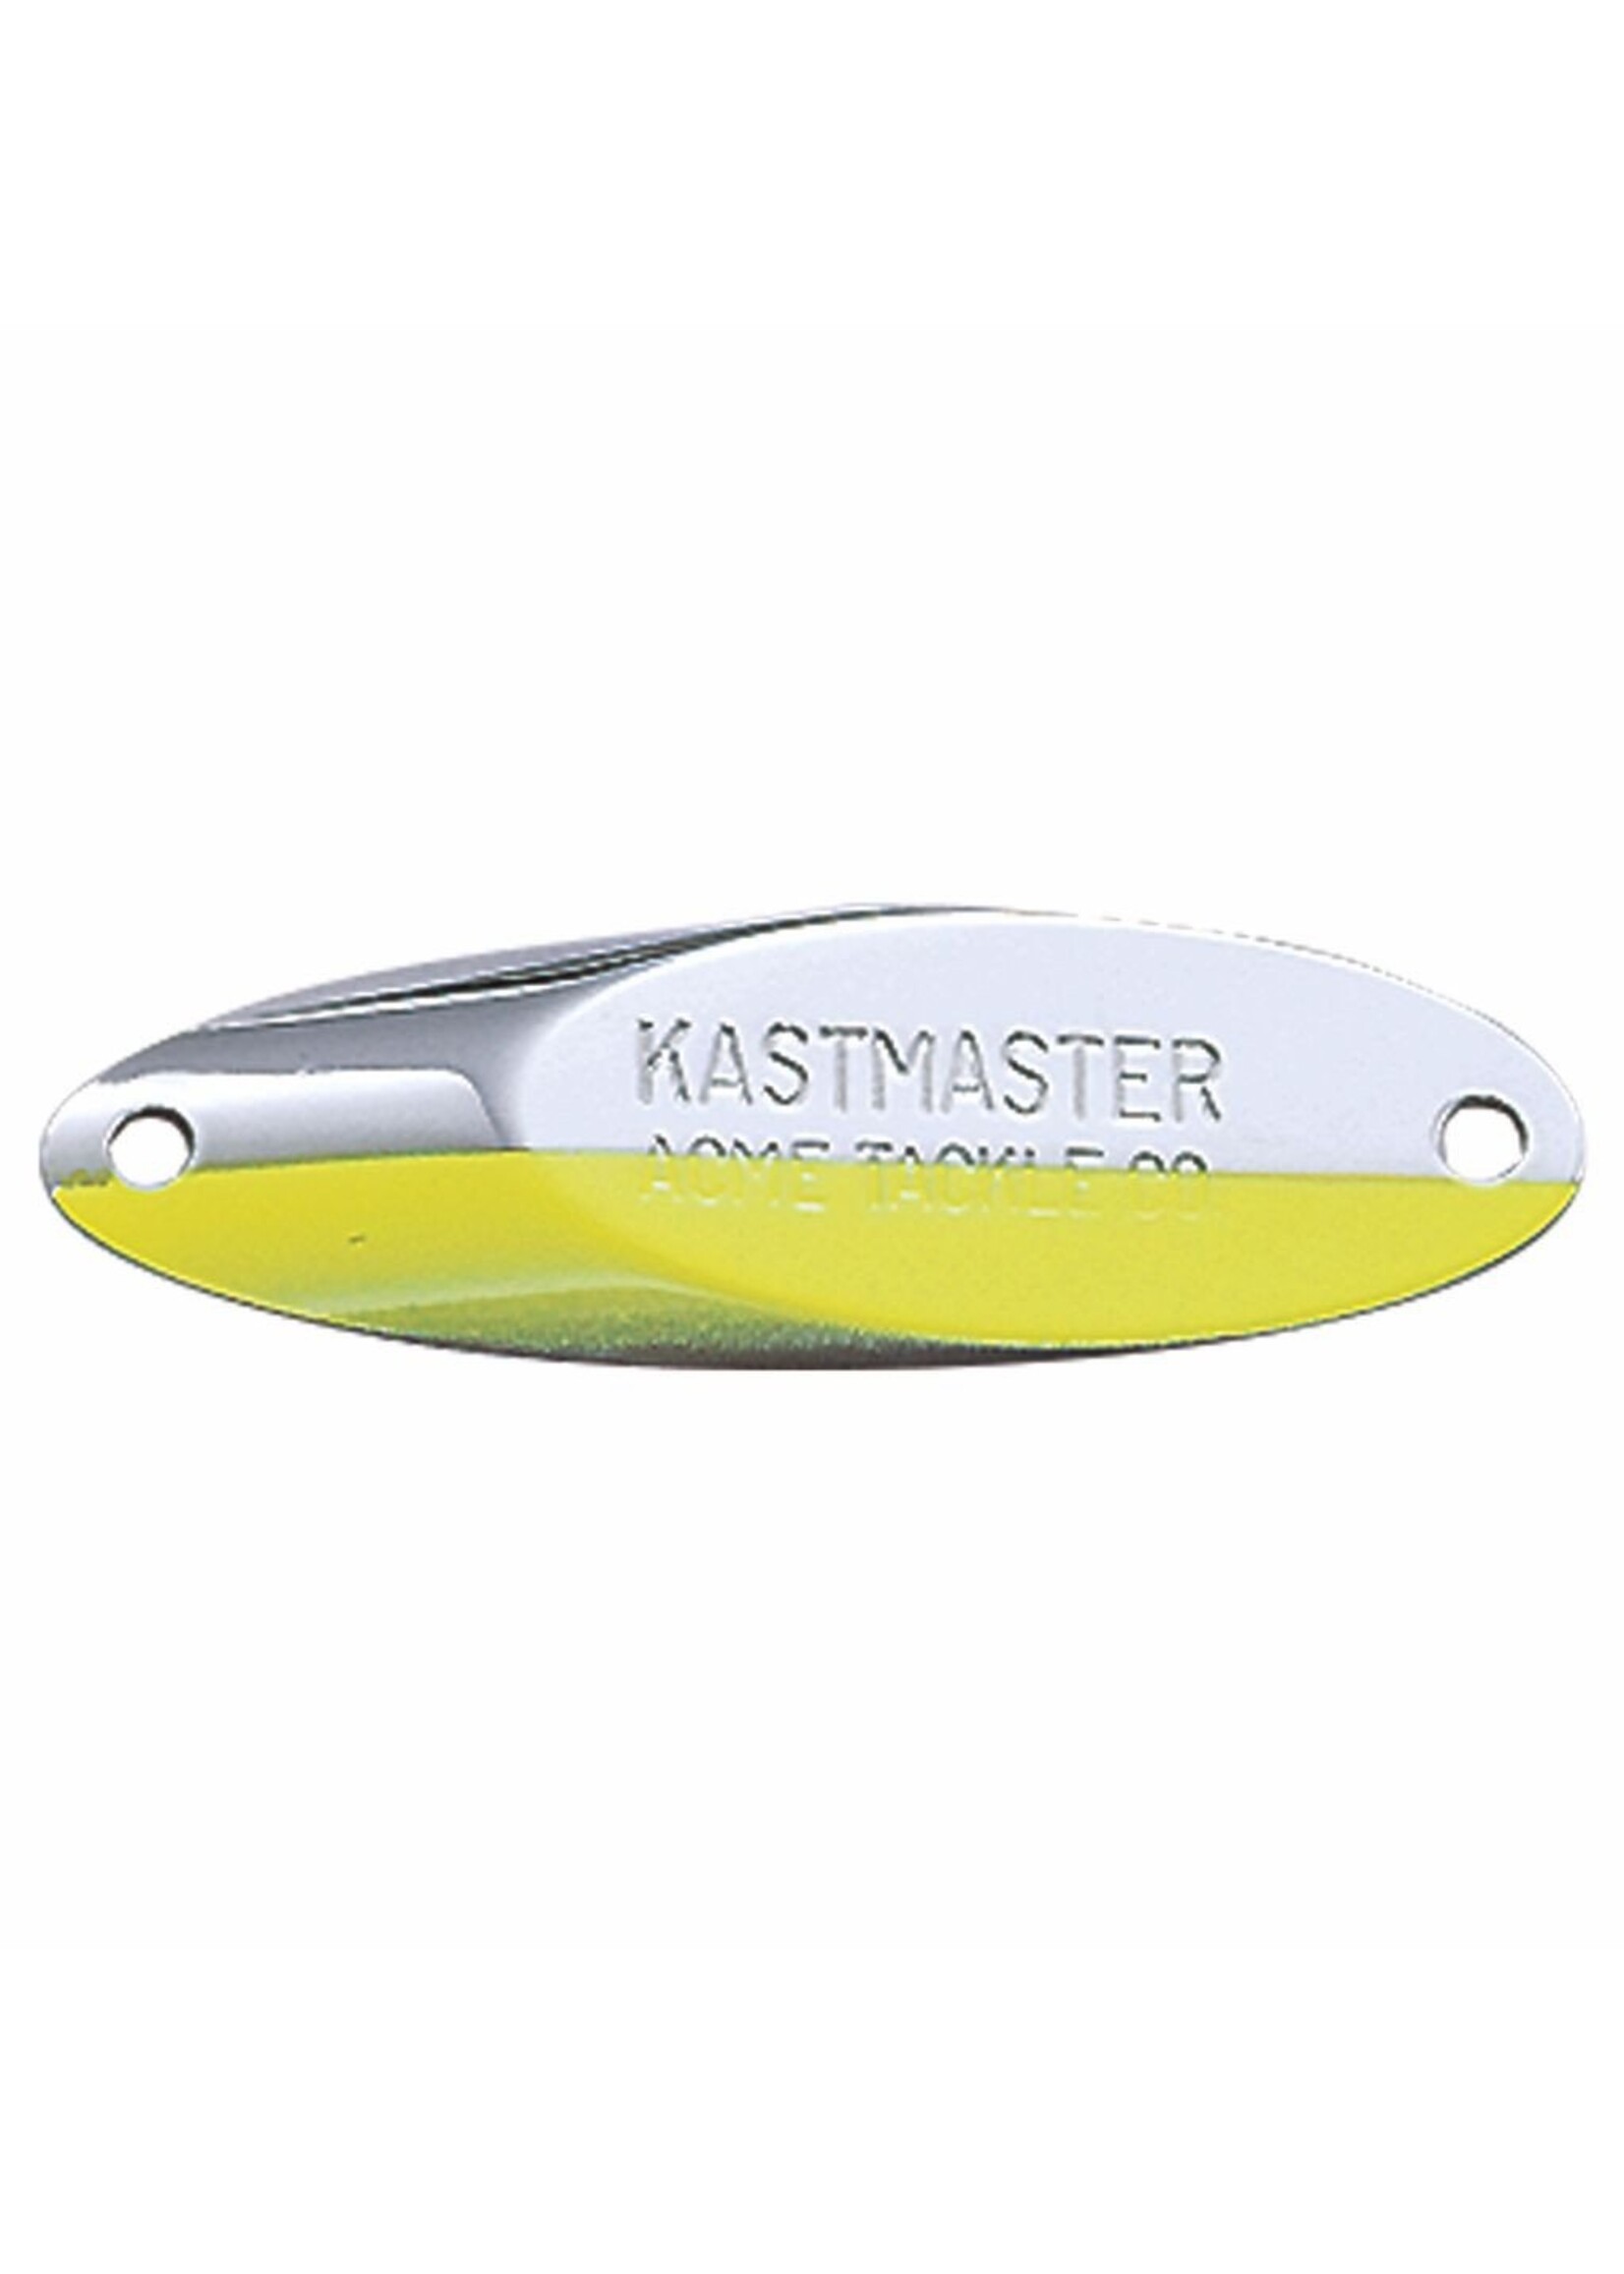 Acme Kastmaster - 1/12 oz. - Tackle Shack